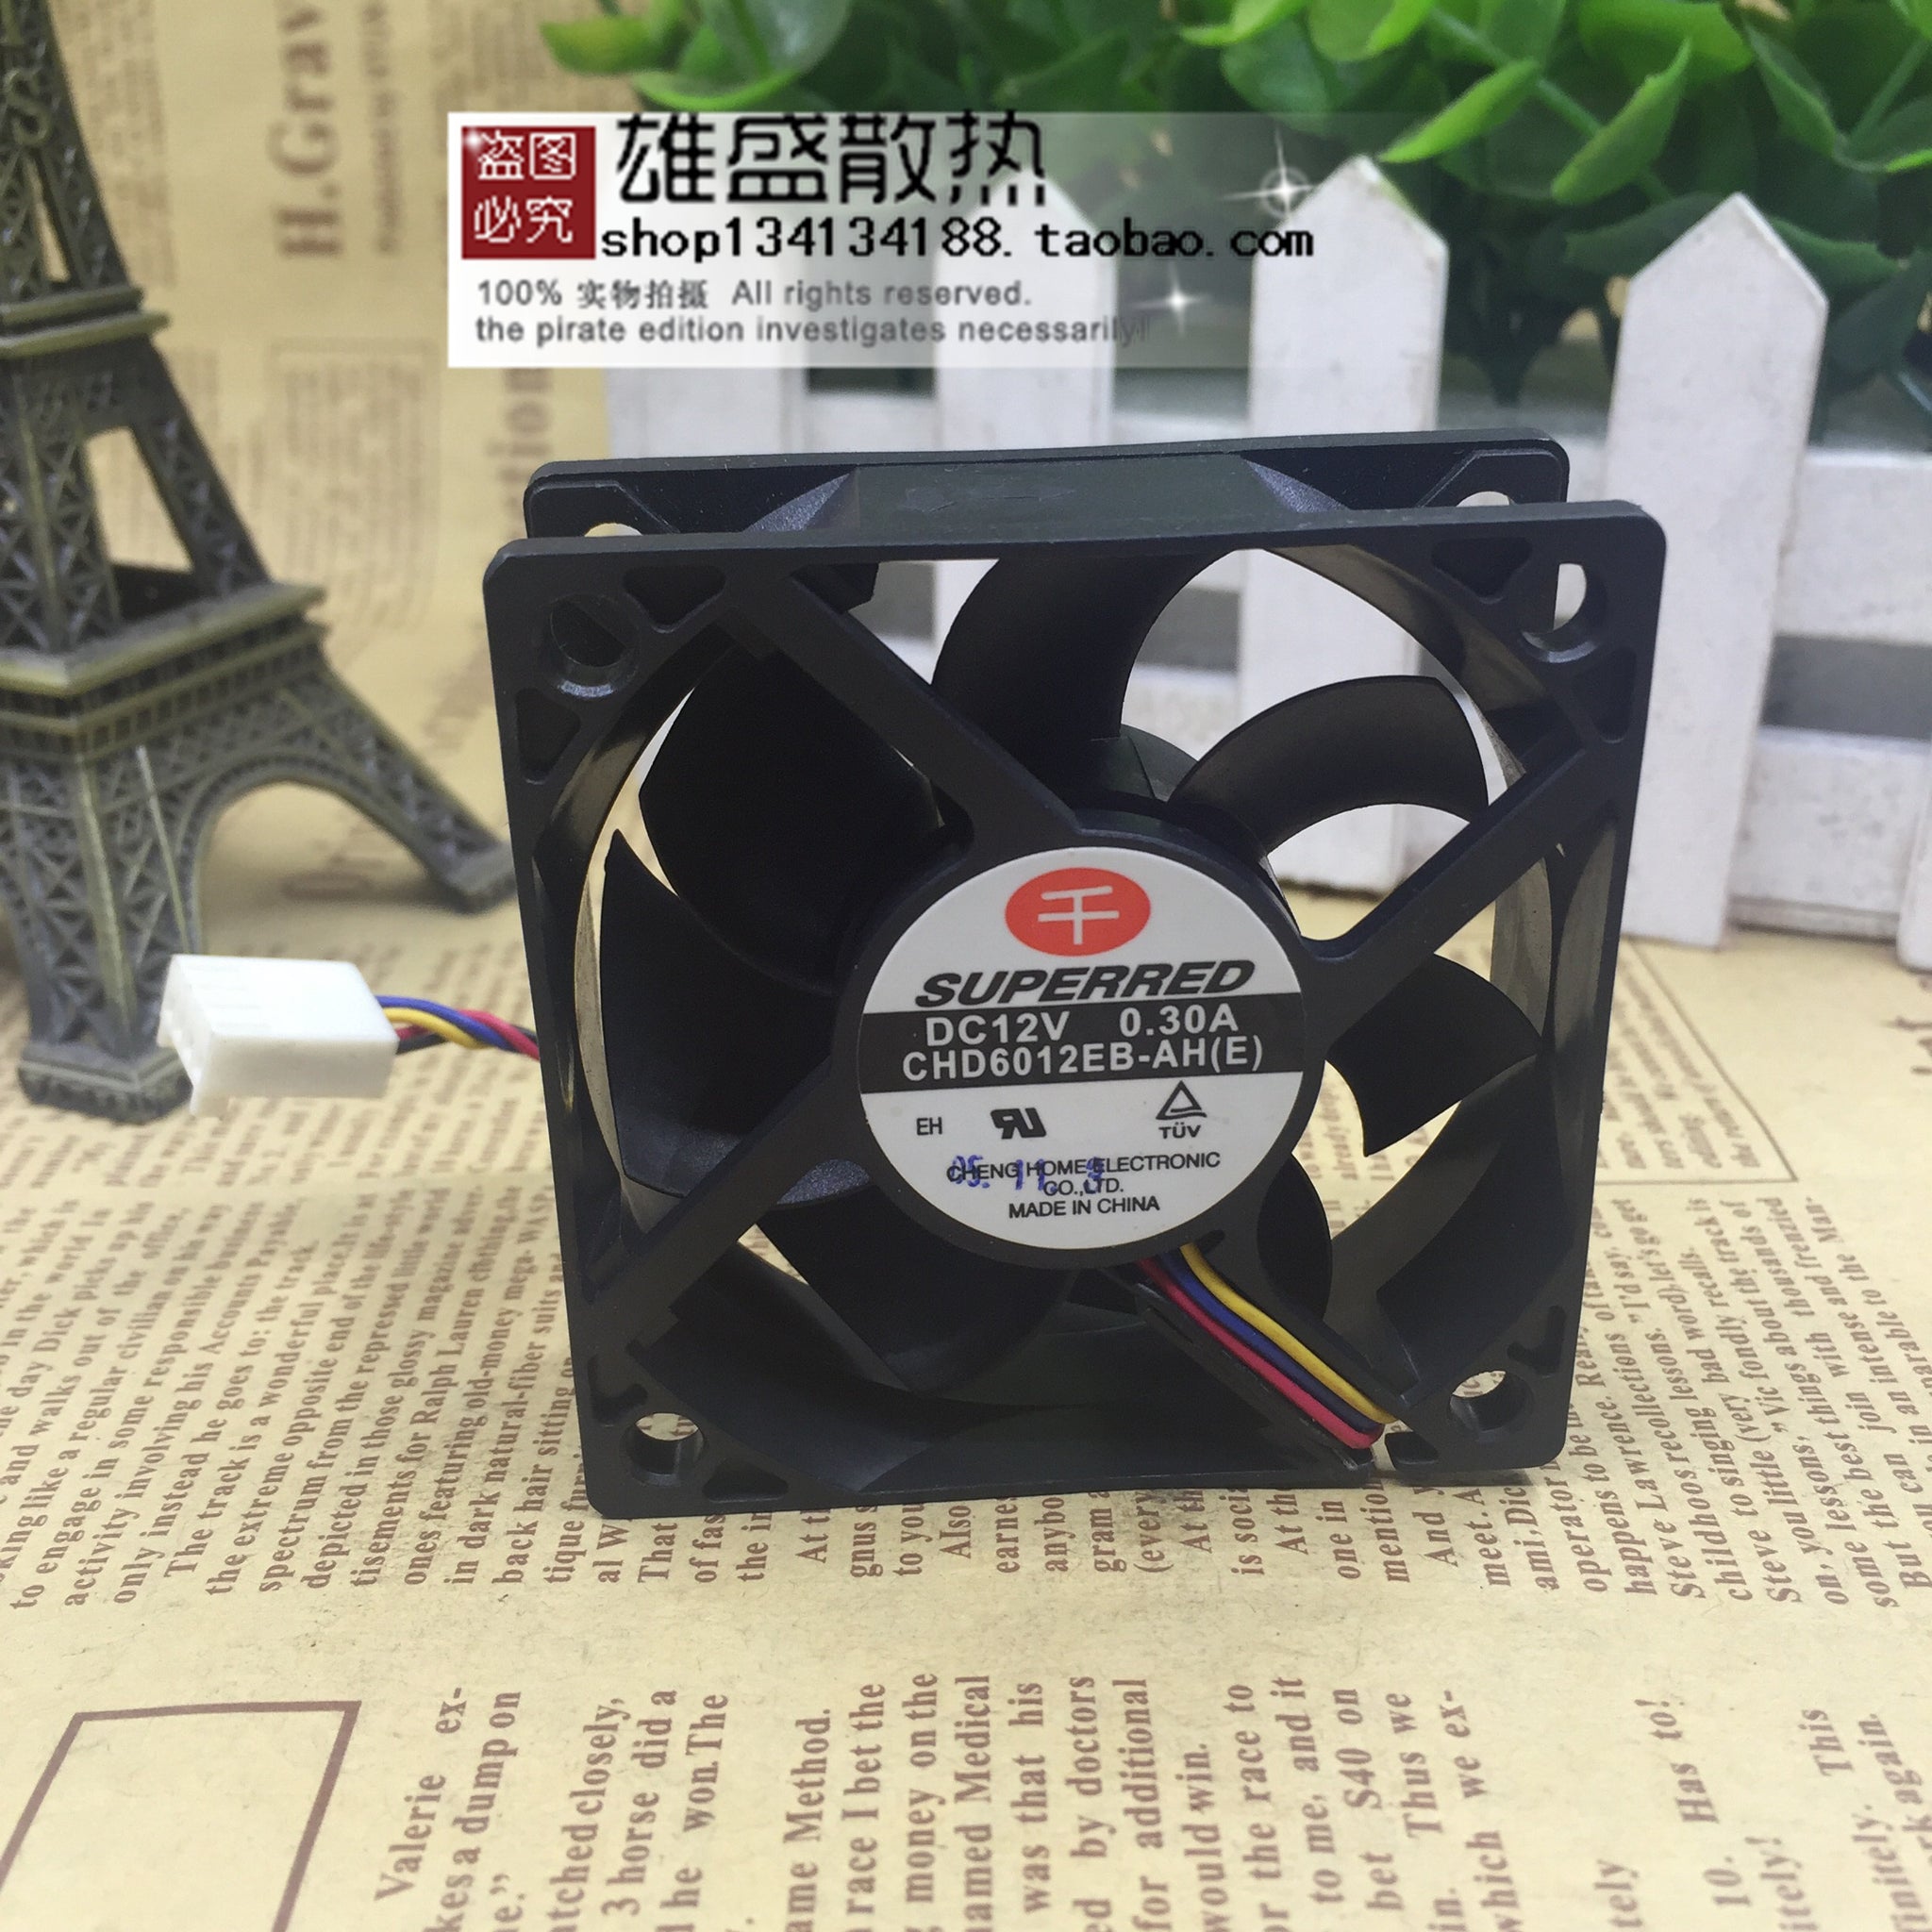 Qianhong 60126cm12v 0.30 Ball Fan CHD6012EB-AH(E) Four-Wire Temperature Control Fan